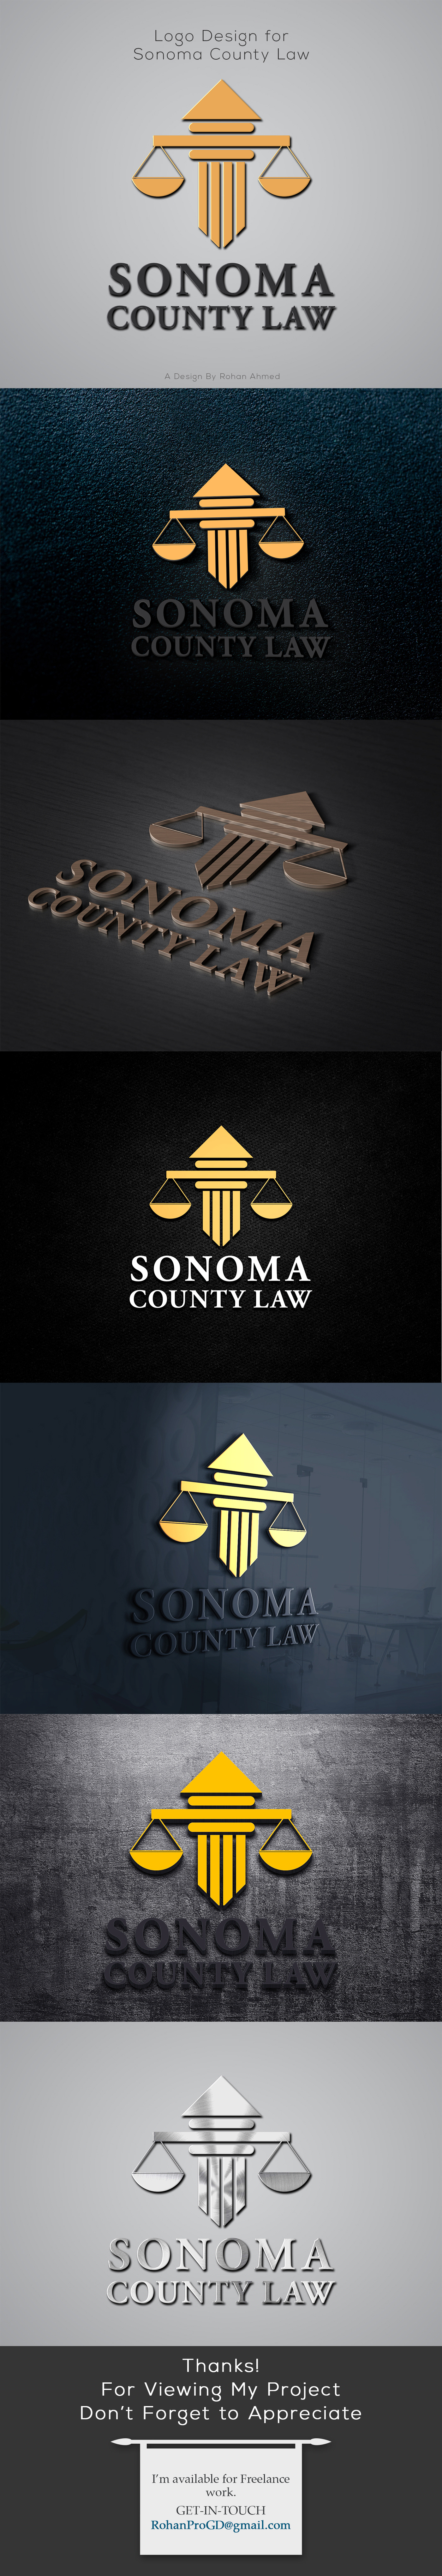 logo design law services